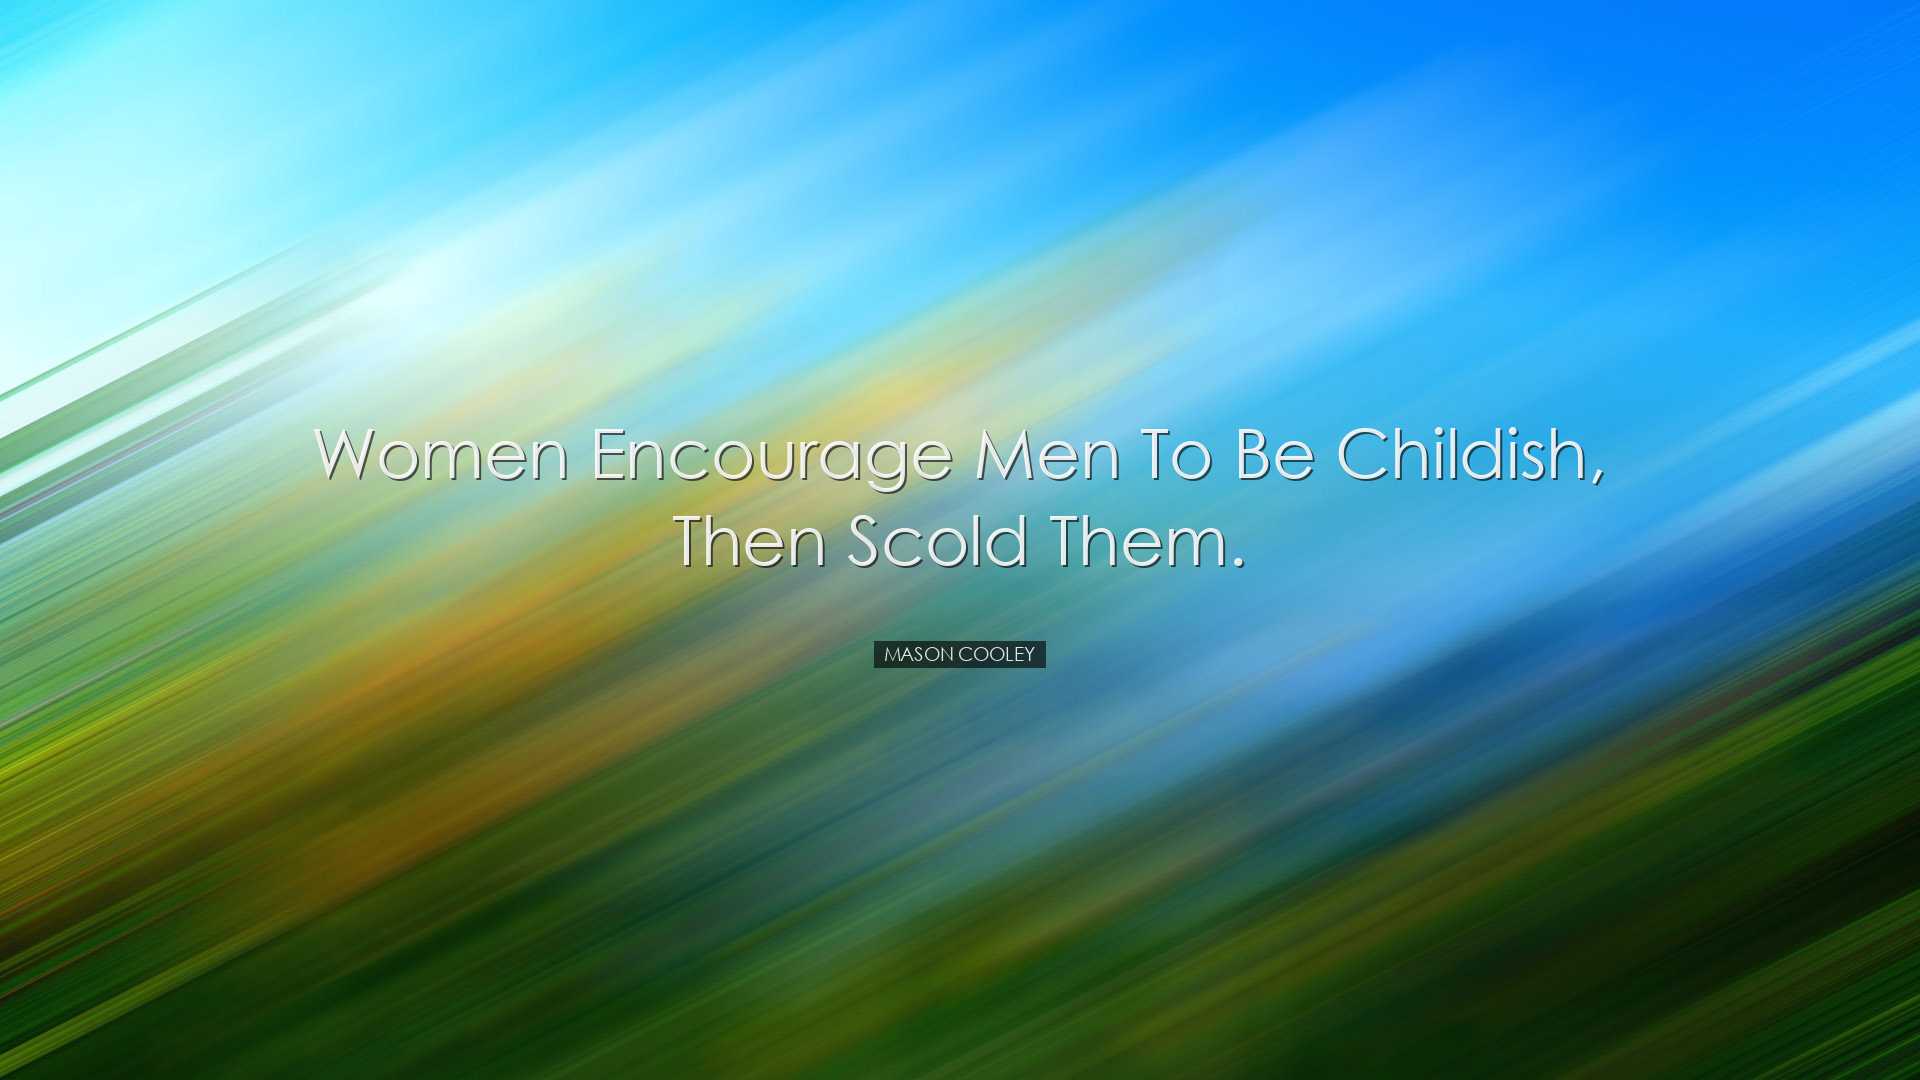 Women encourage men to be childish, then scold them. - Mason Coole